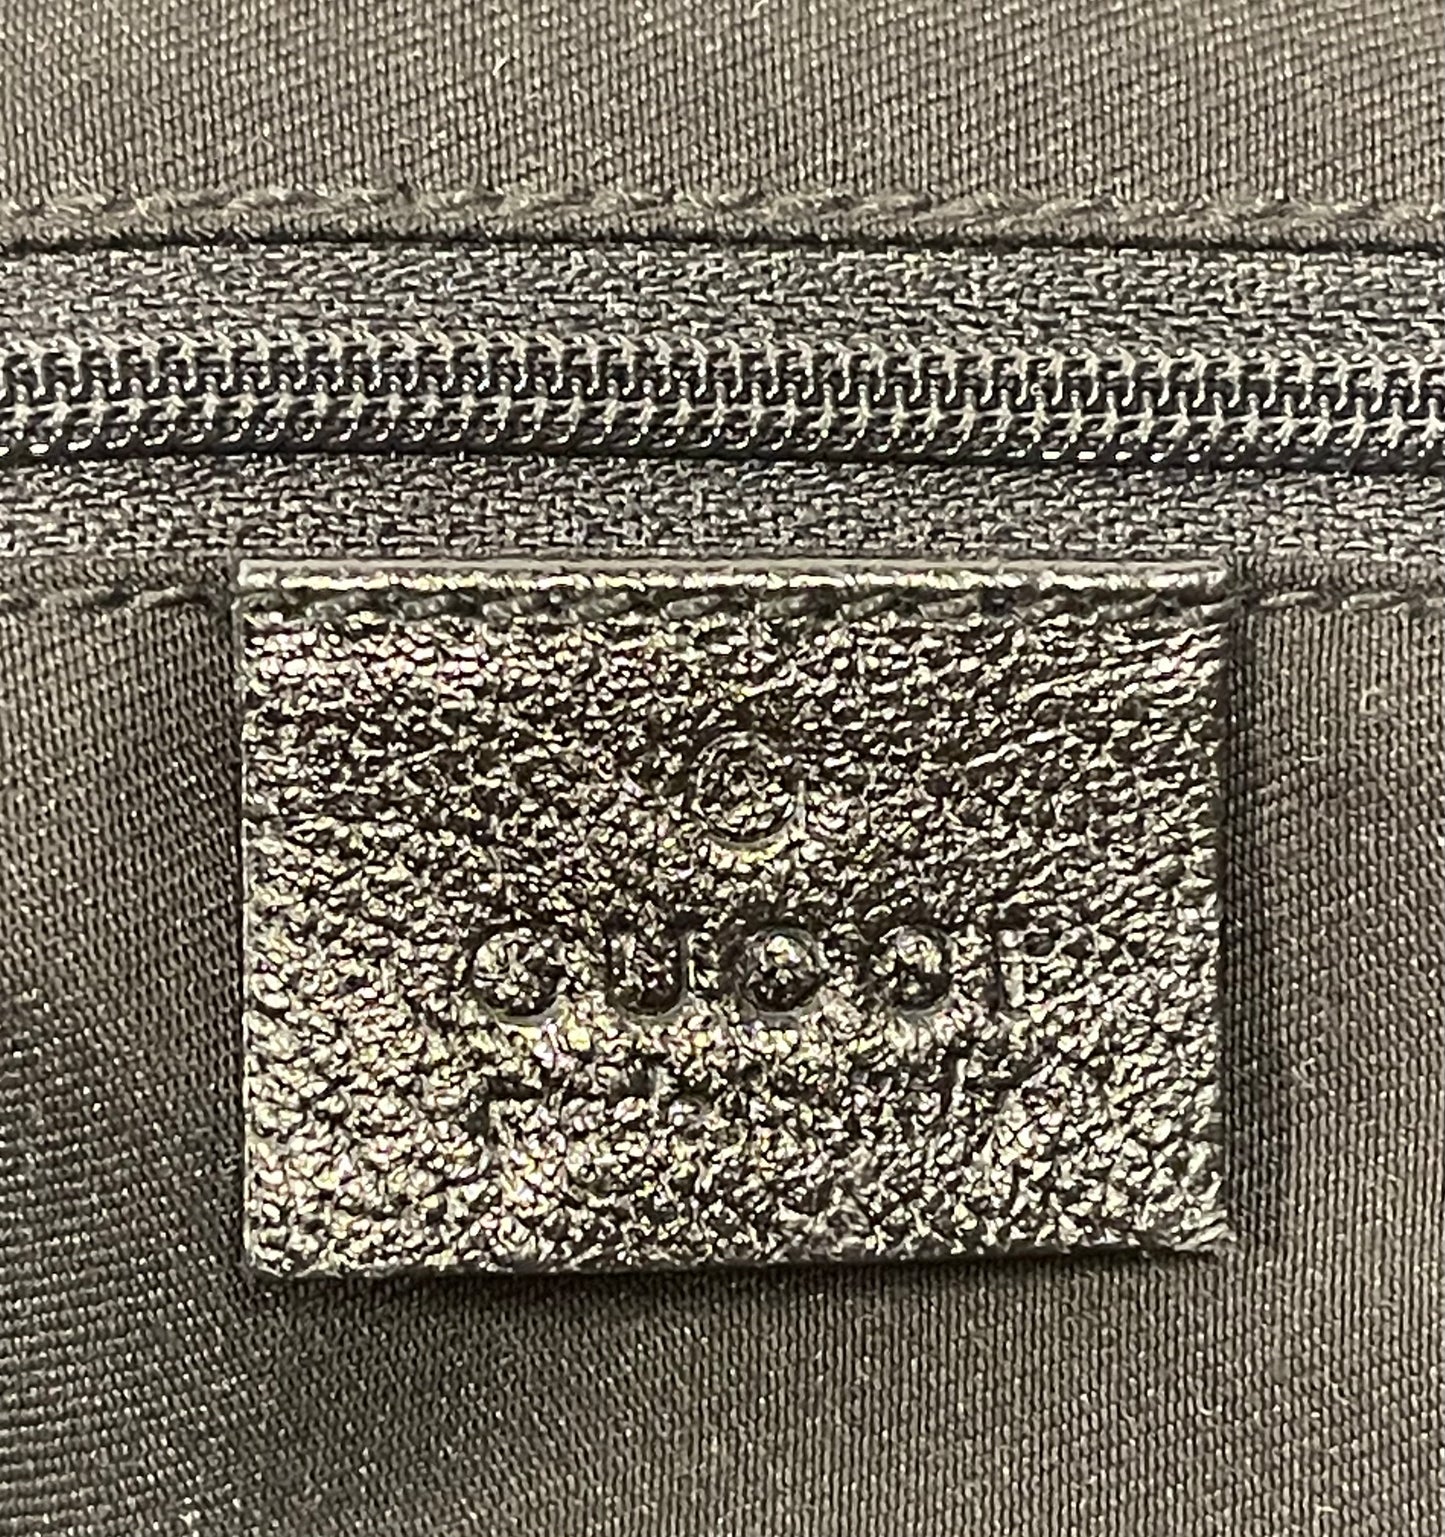 Gucci Vintage Black GG Monogram Canvas Sherry Line Bow Prince Boston Satchel Shoulder Bag